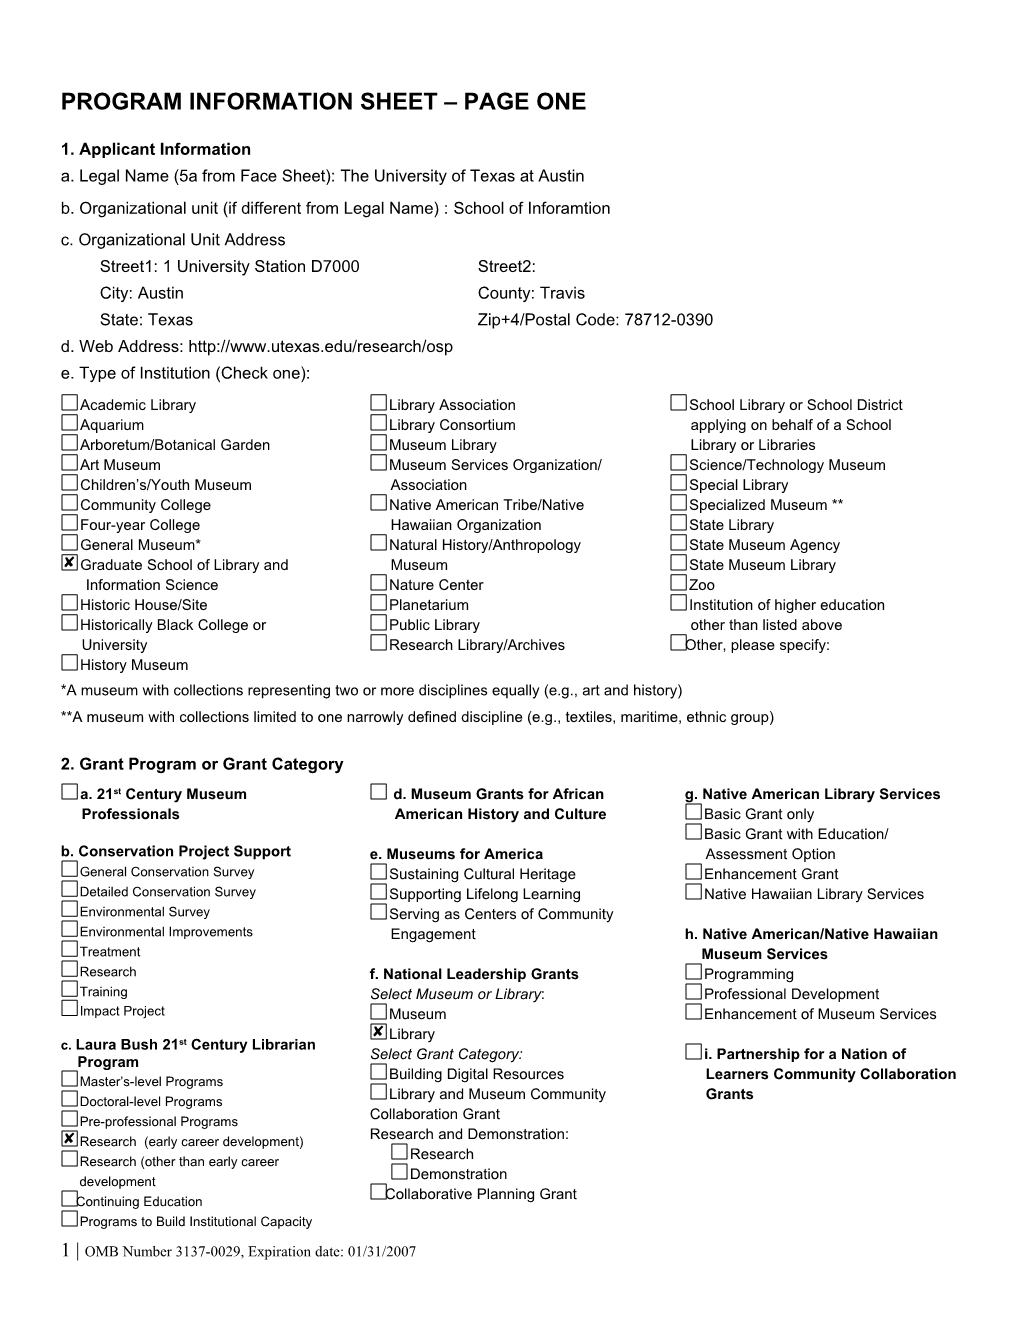 Program Information Sheet Page One